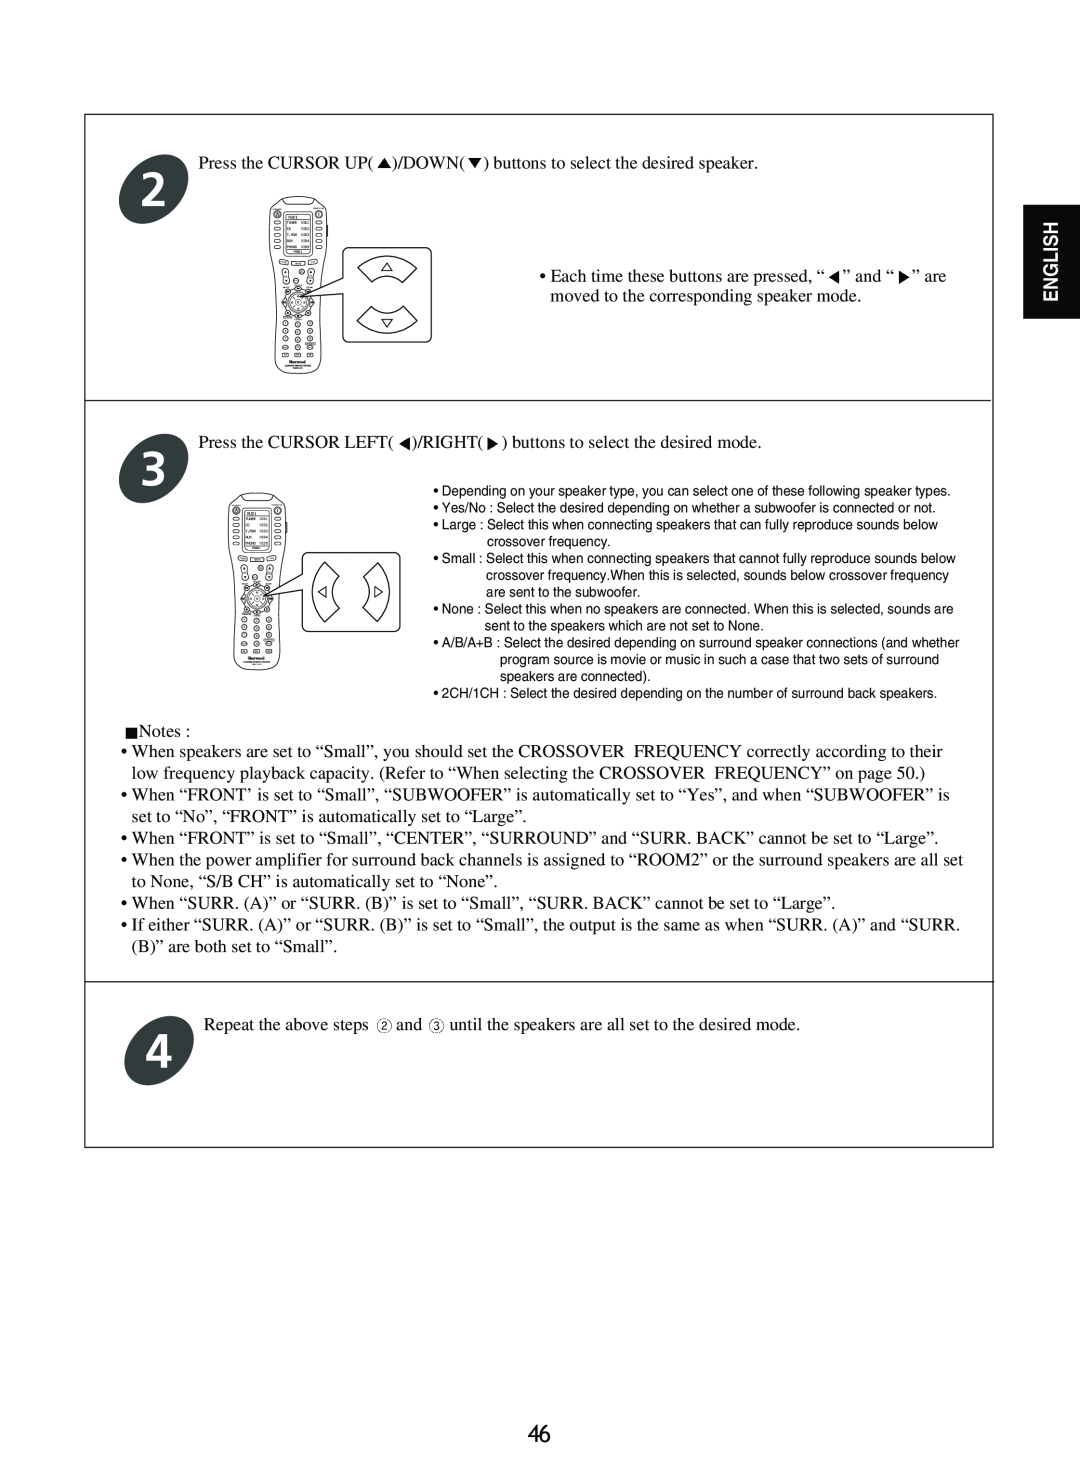 Sherwood R-965 manual moved to the corresponding speaker mode, English 